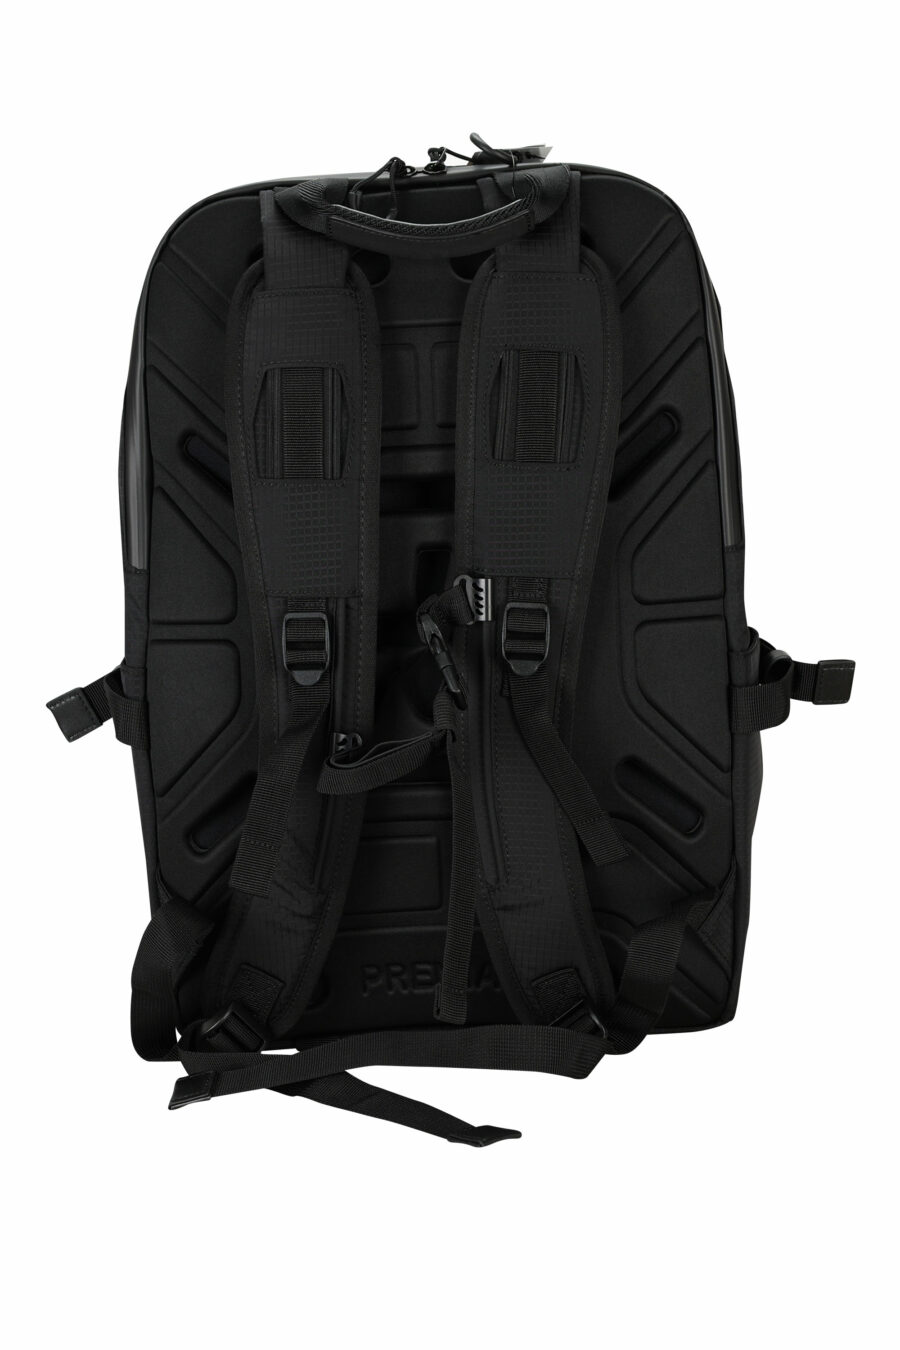 VENTURA 2115 black backpack - 8058326265919 2 1